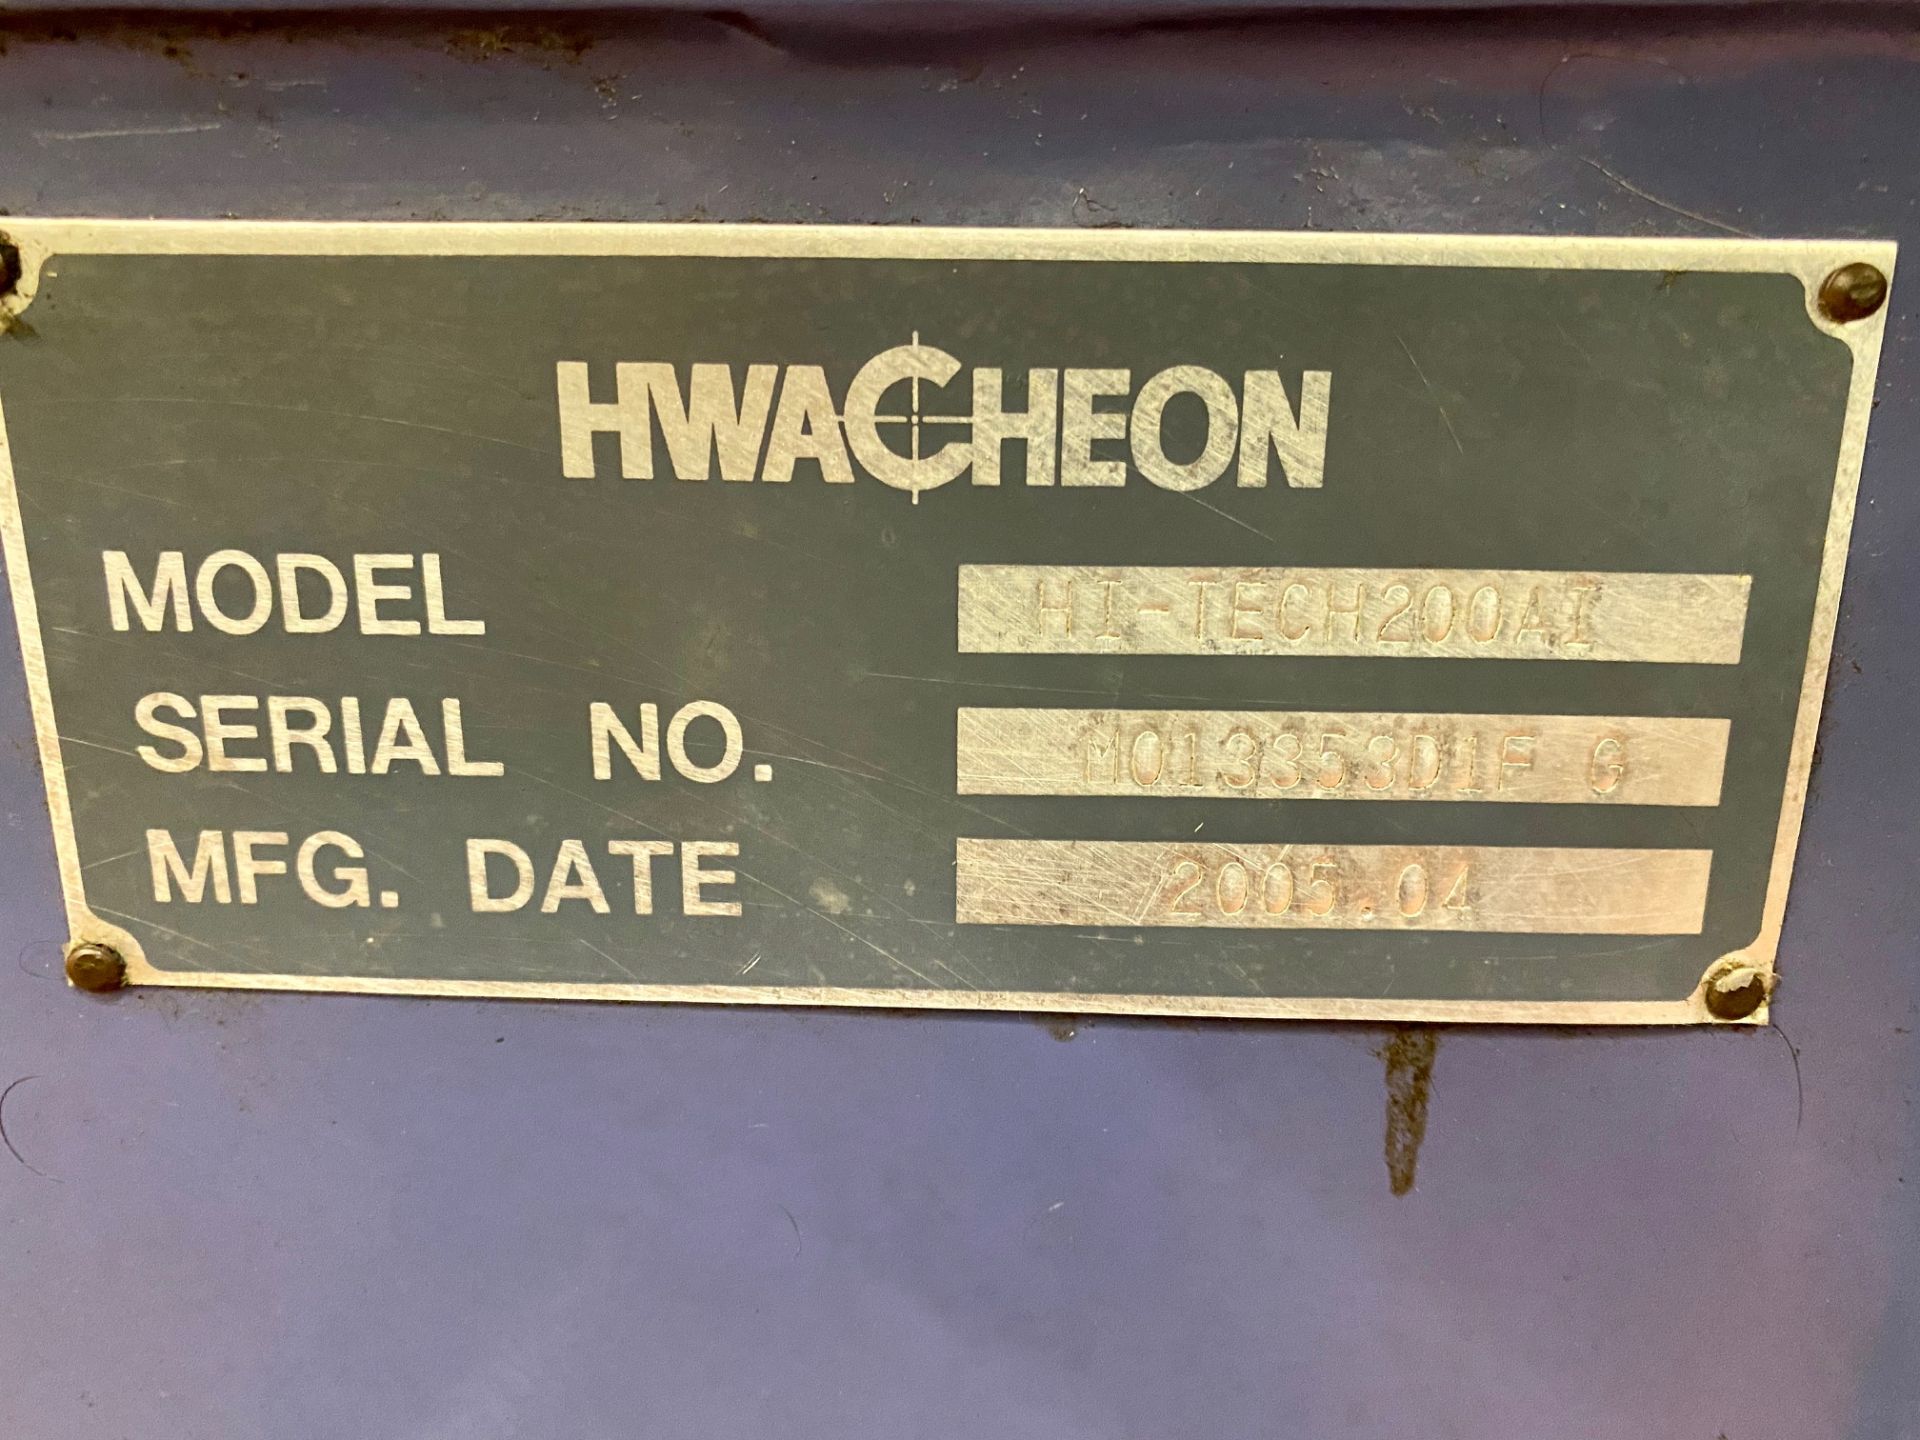 2005 HWACHEON HI TECH 200AI CNC TURNING CENTER, FANUC O1-TB CNC CONTROL, 8" KITAGAWA 3-JAW CHUCK, - Image 11 of 12